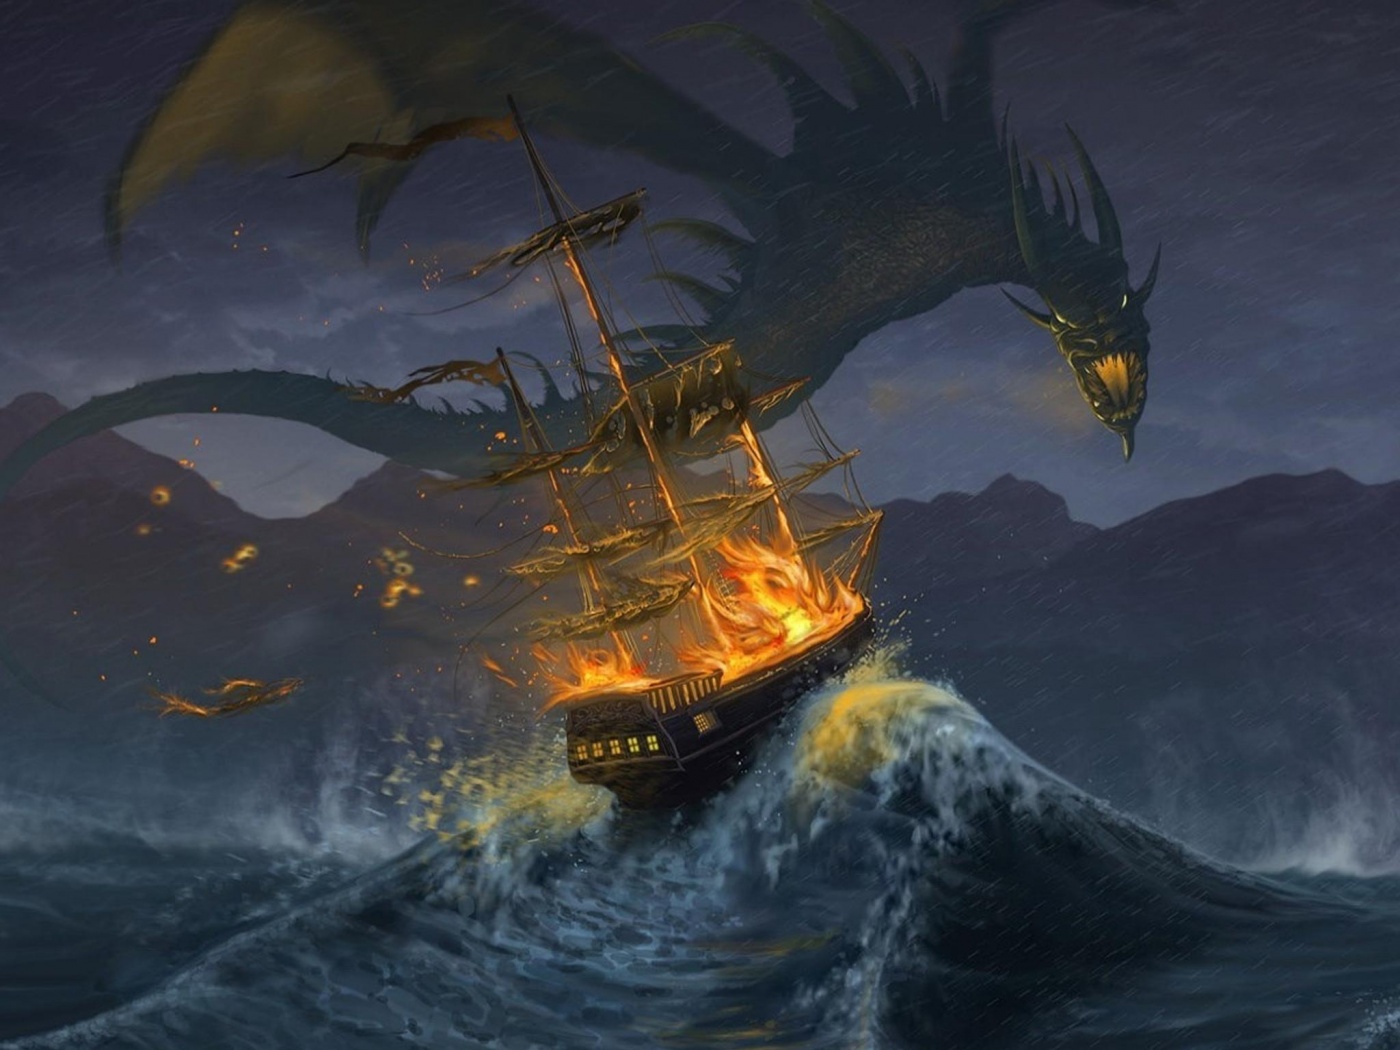 Дракон нападает на корабль обои